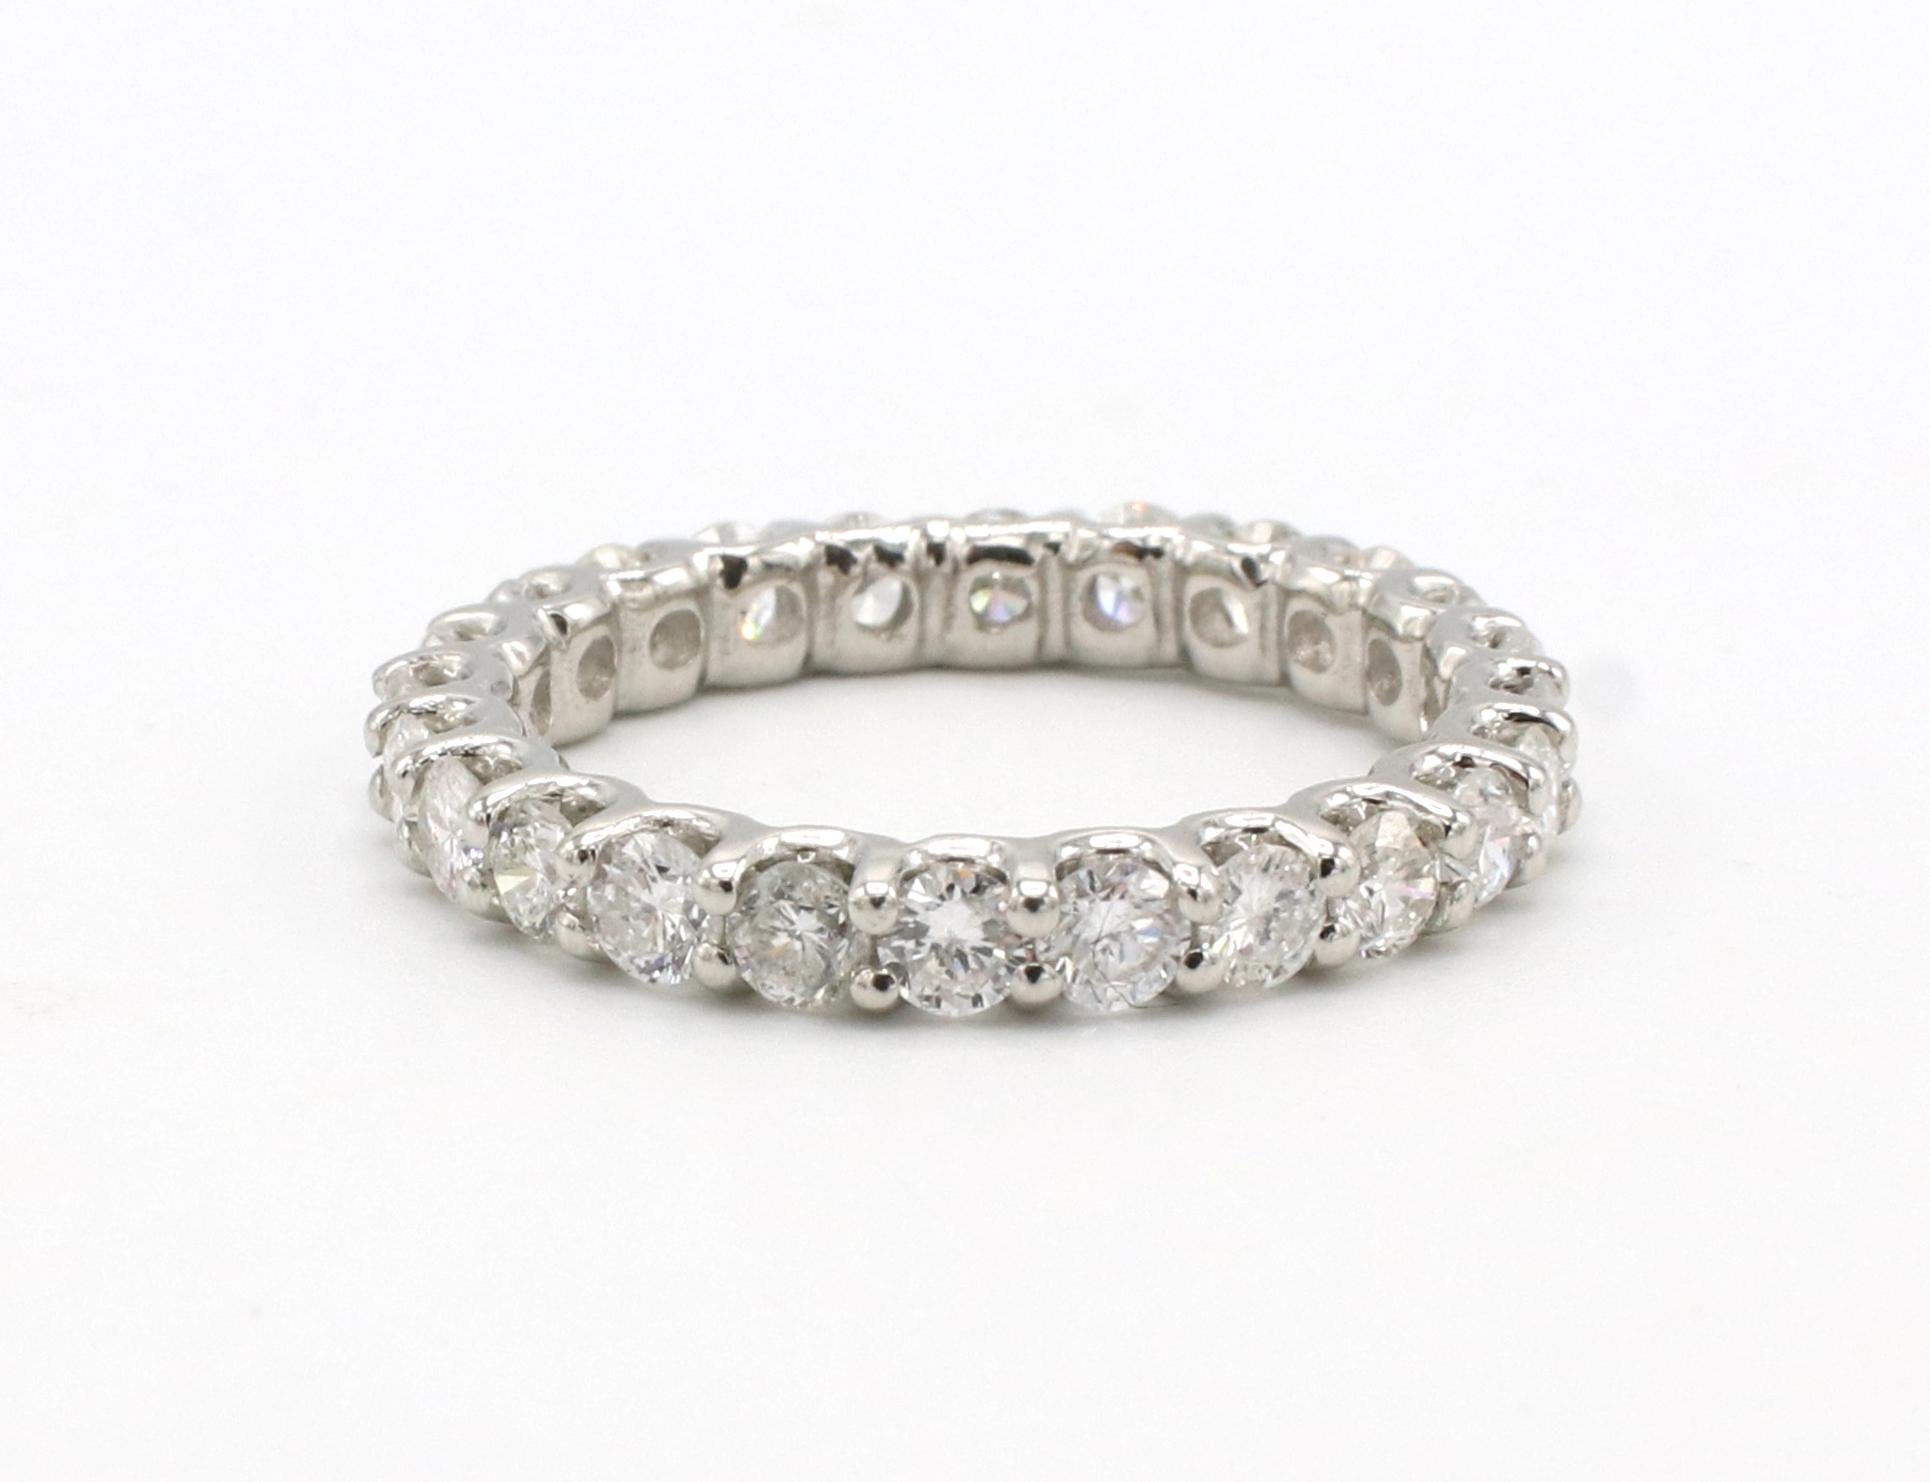 Platinum 1.50 Carat Natural Round Diamond Eternity Band Ring 
Metal: Platinum
Weight: 4.18 grams
Diamonds: Approx. 1.50 carats natural round diamonds G-H SI
Size: 6 (US)
Width: 2.6mm
